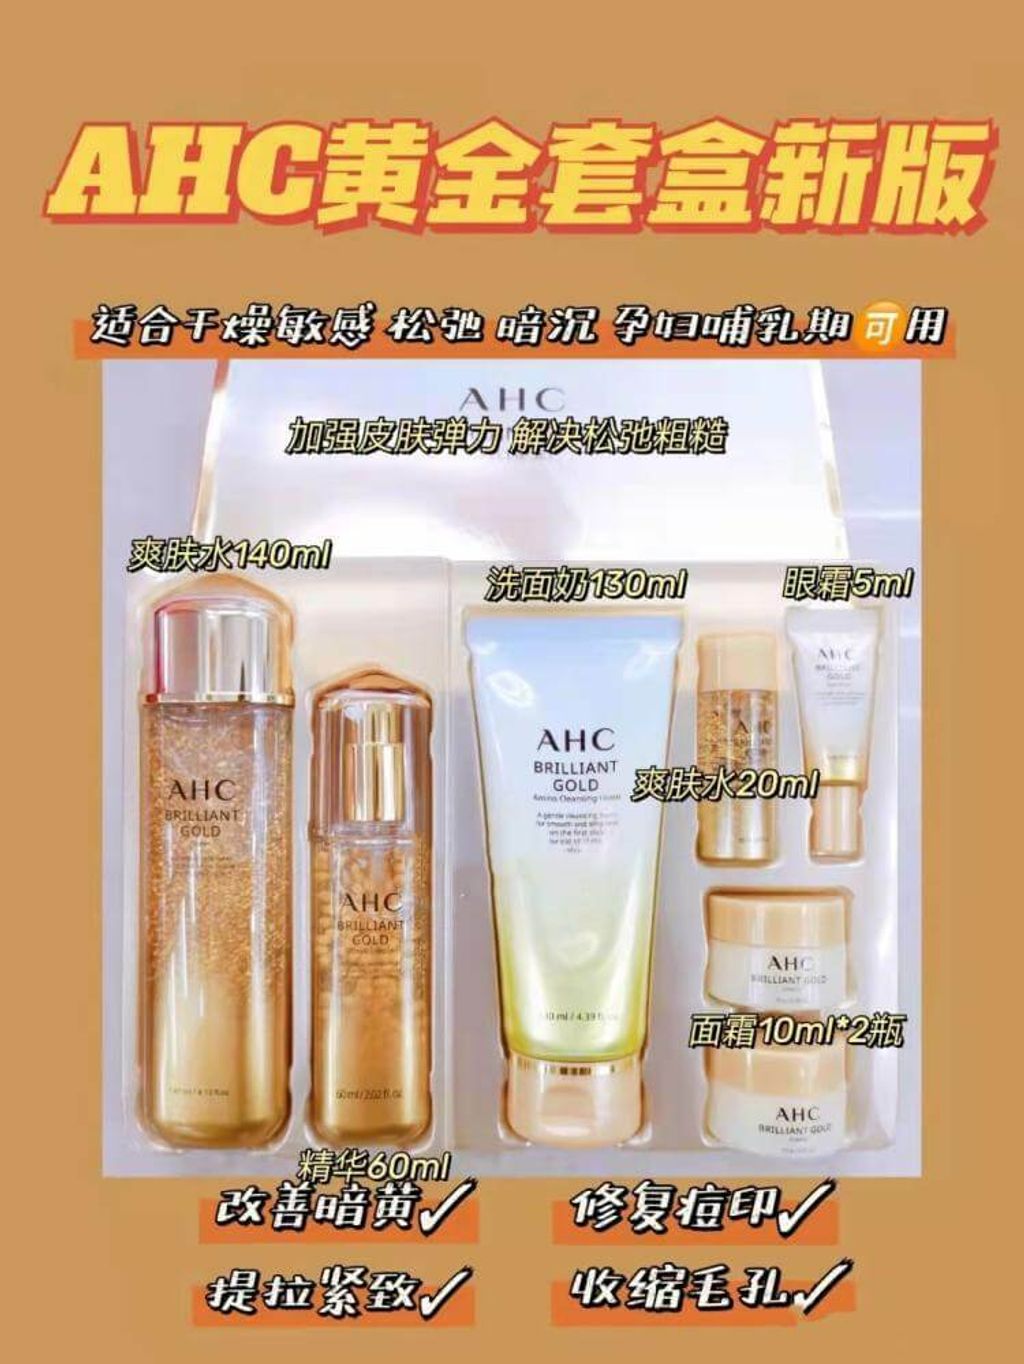 JuzBeauty_JuzBeautyMalaysia_JuzPretty_Authentic_Kbeauty_Malaysia_Skin_Care_Cosmetics_Jbeauty_Australia_Health_Care_AHC_Brilliant_Gold_Special_Set_ (7).jpg